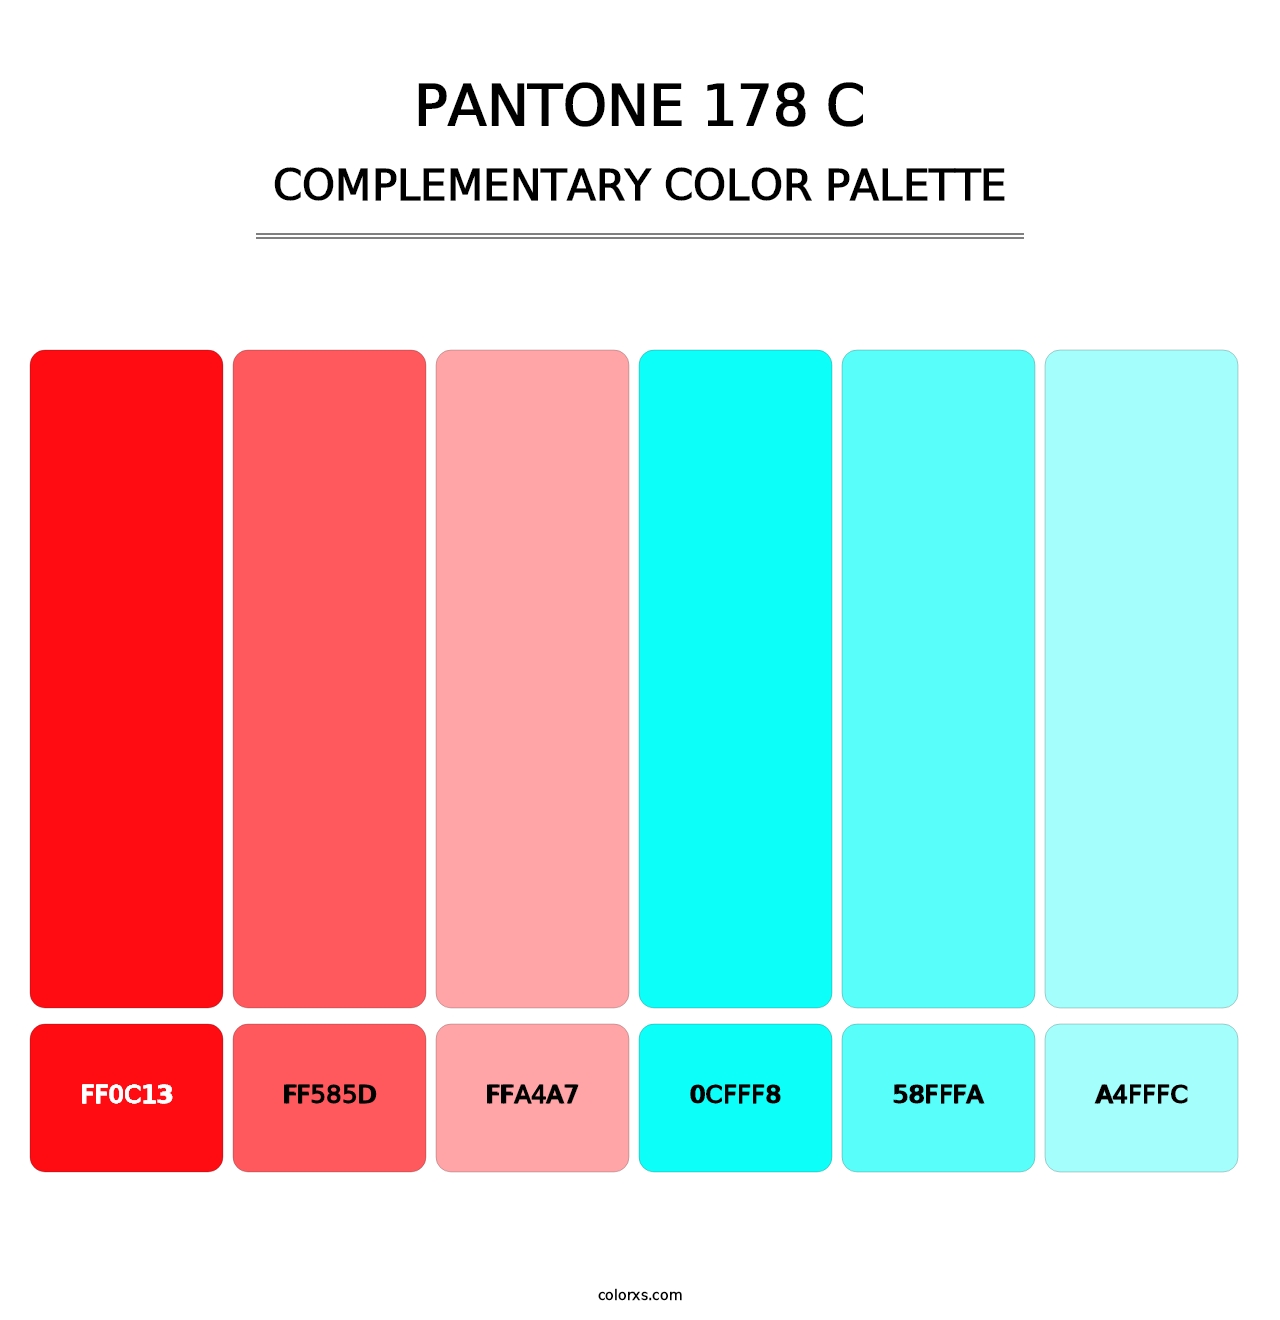 PANTONE 178 C - Complementary Color Palette